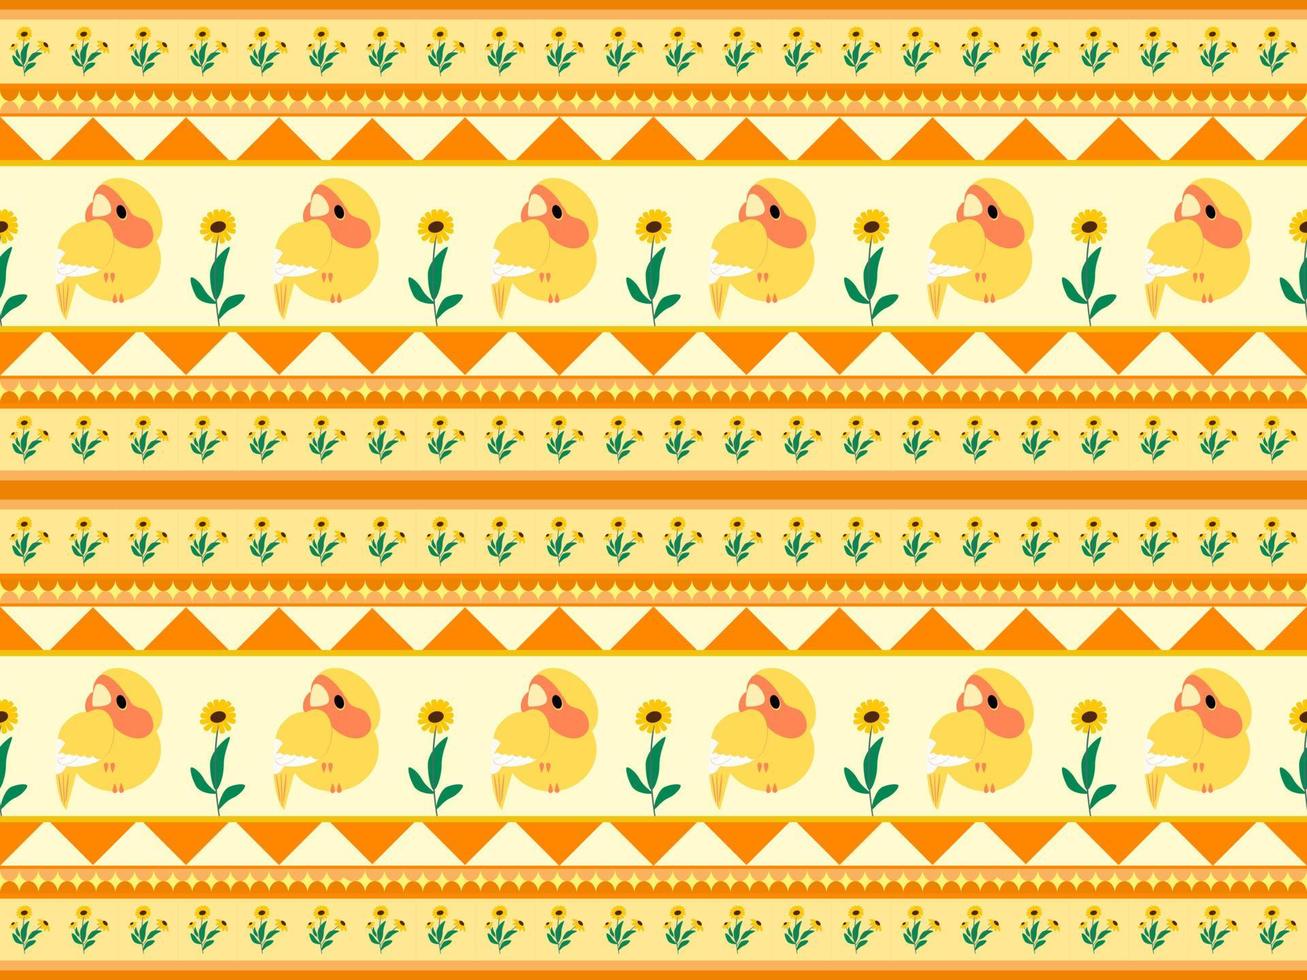 bird cartoon character seamless pattern on yellow background vector